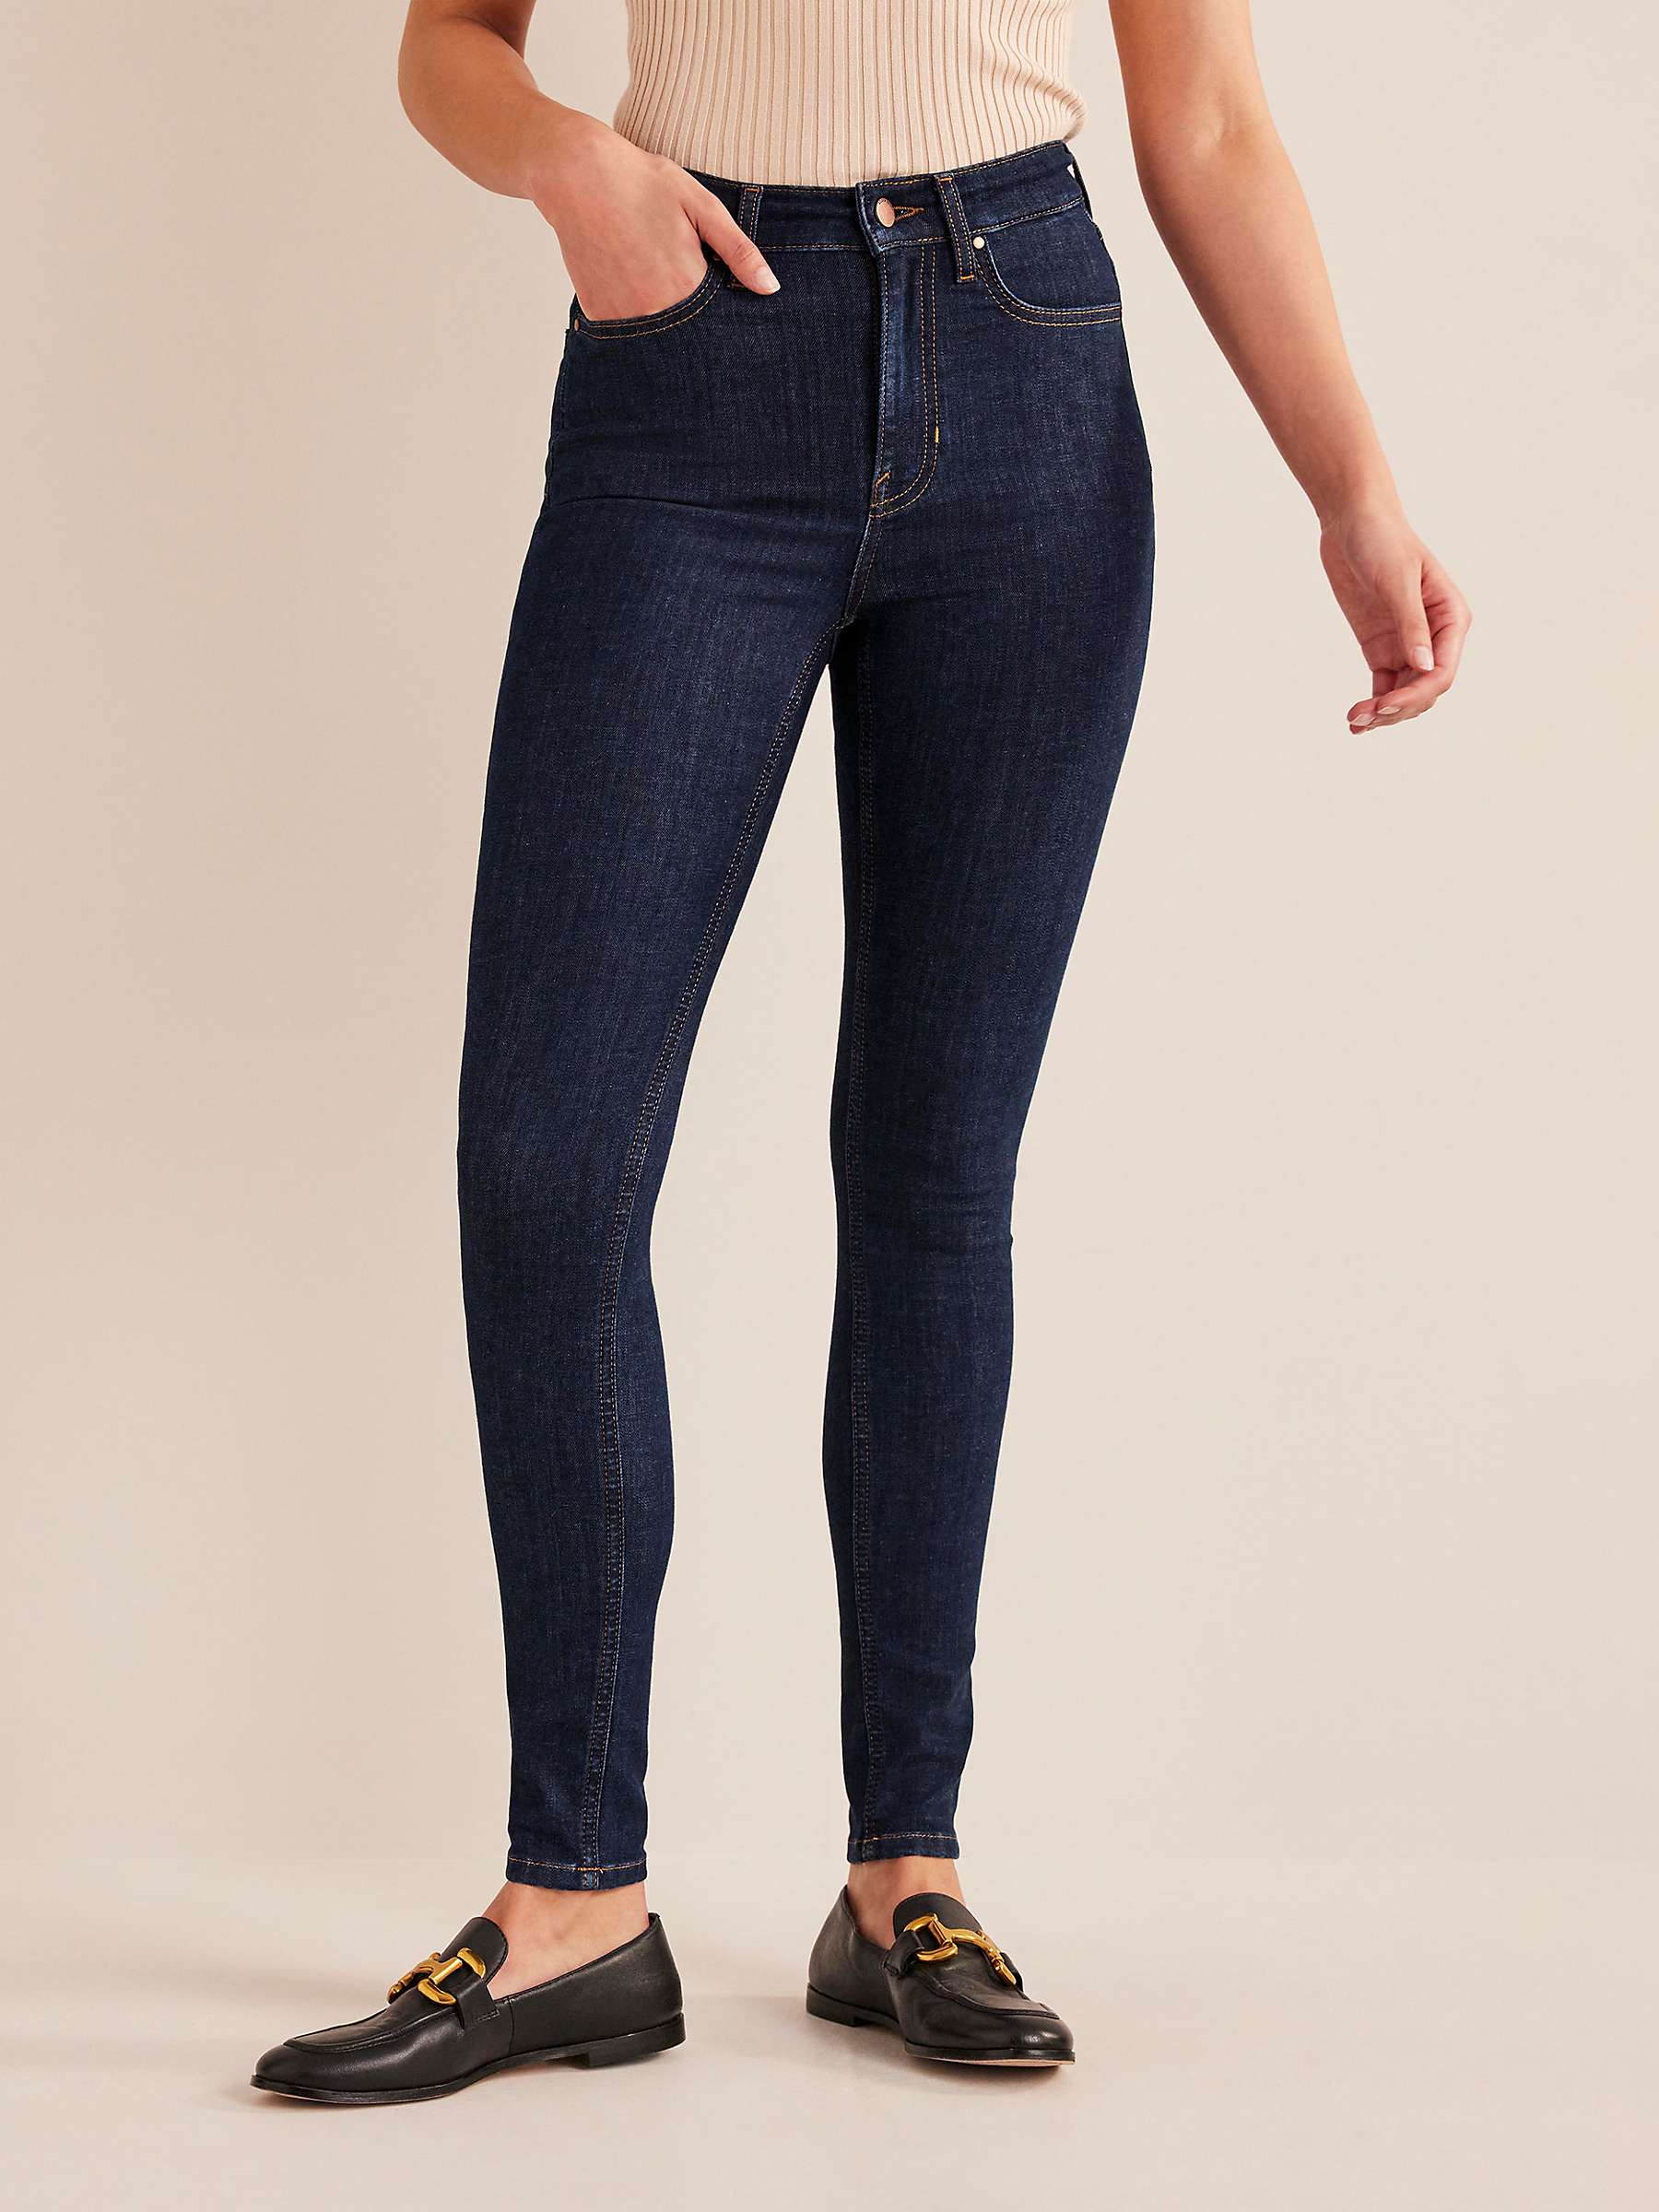 Buy Boden Stretch Skinny Jeans, Indigo Online at johnlewis.com